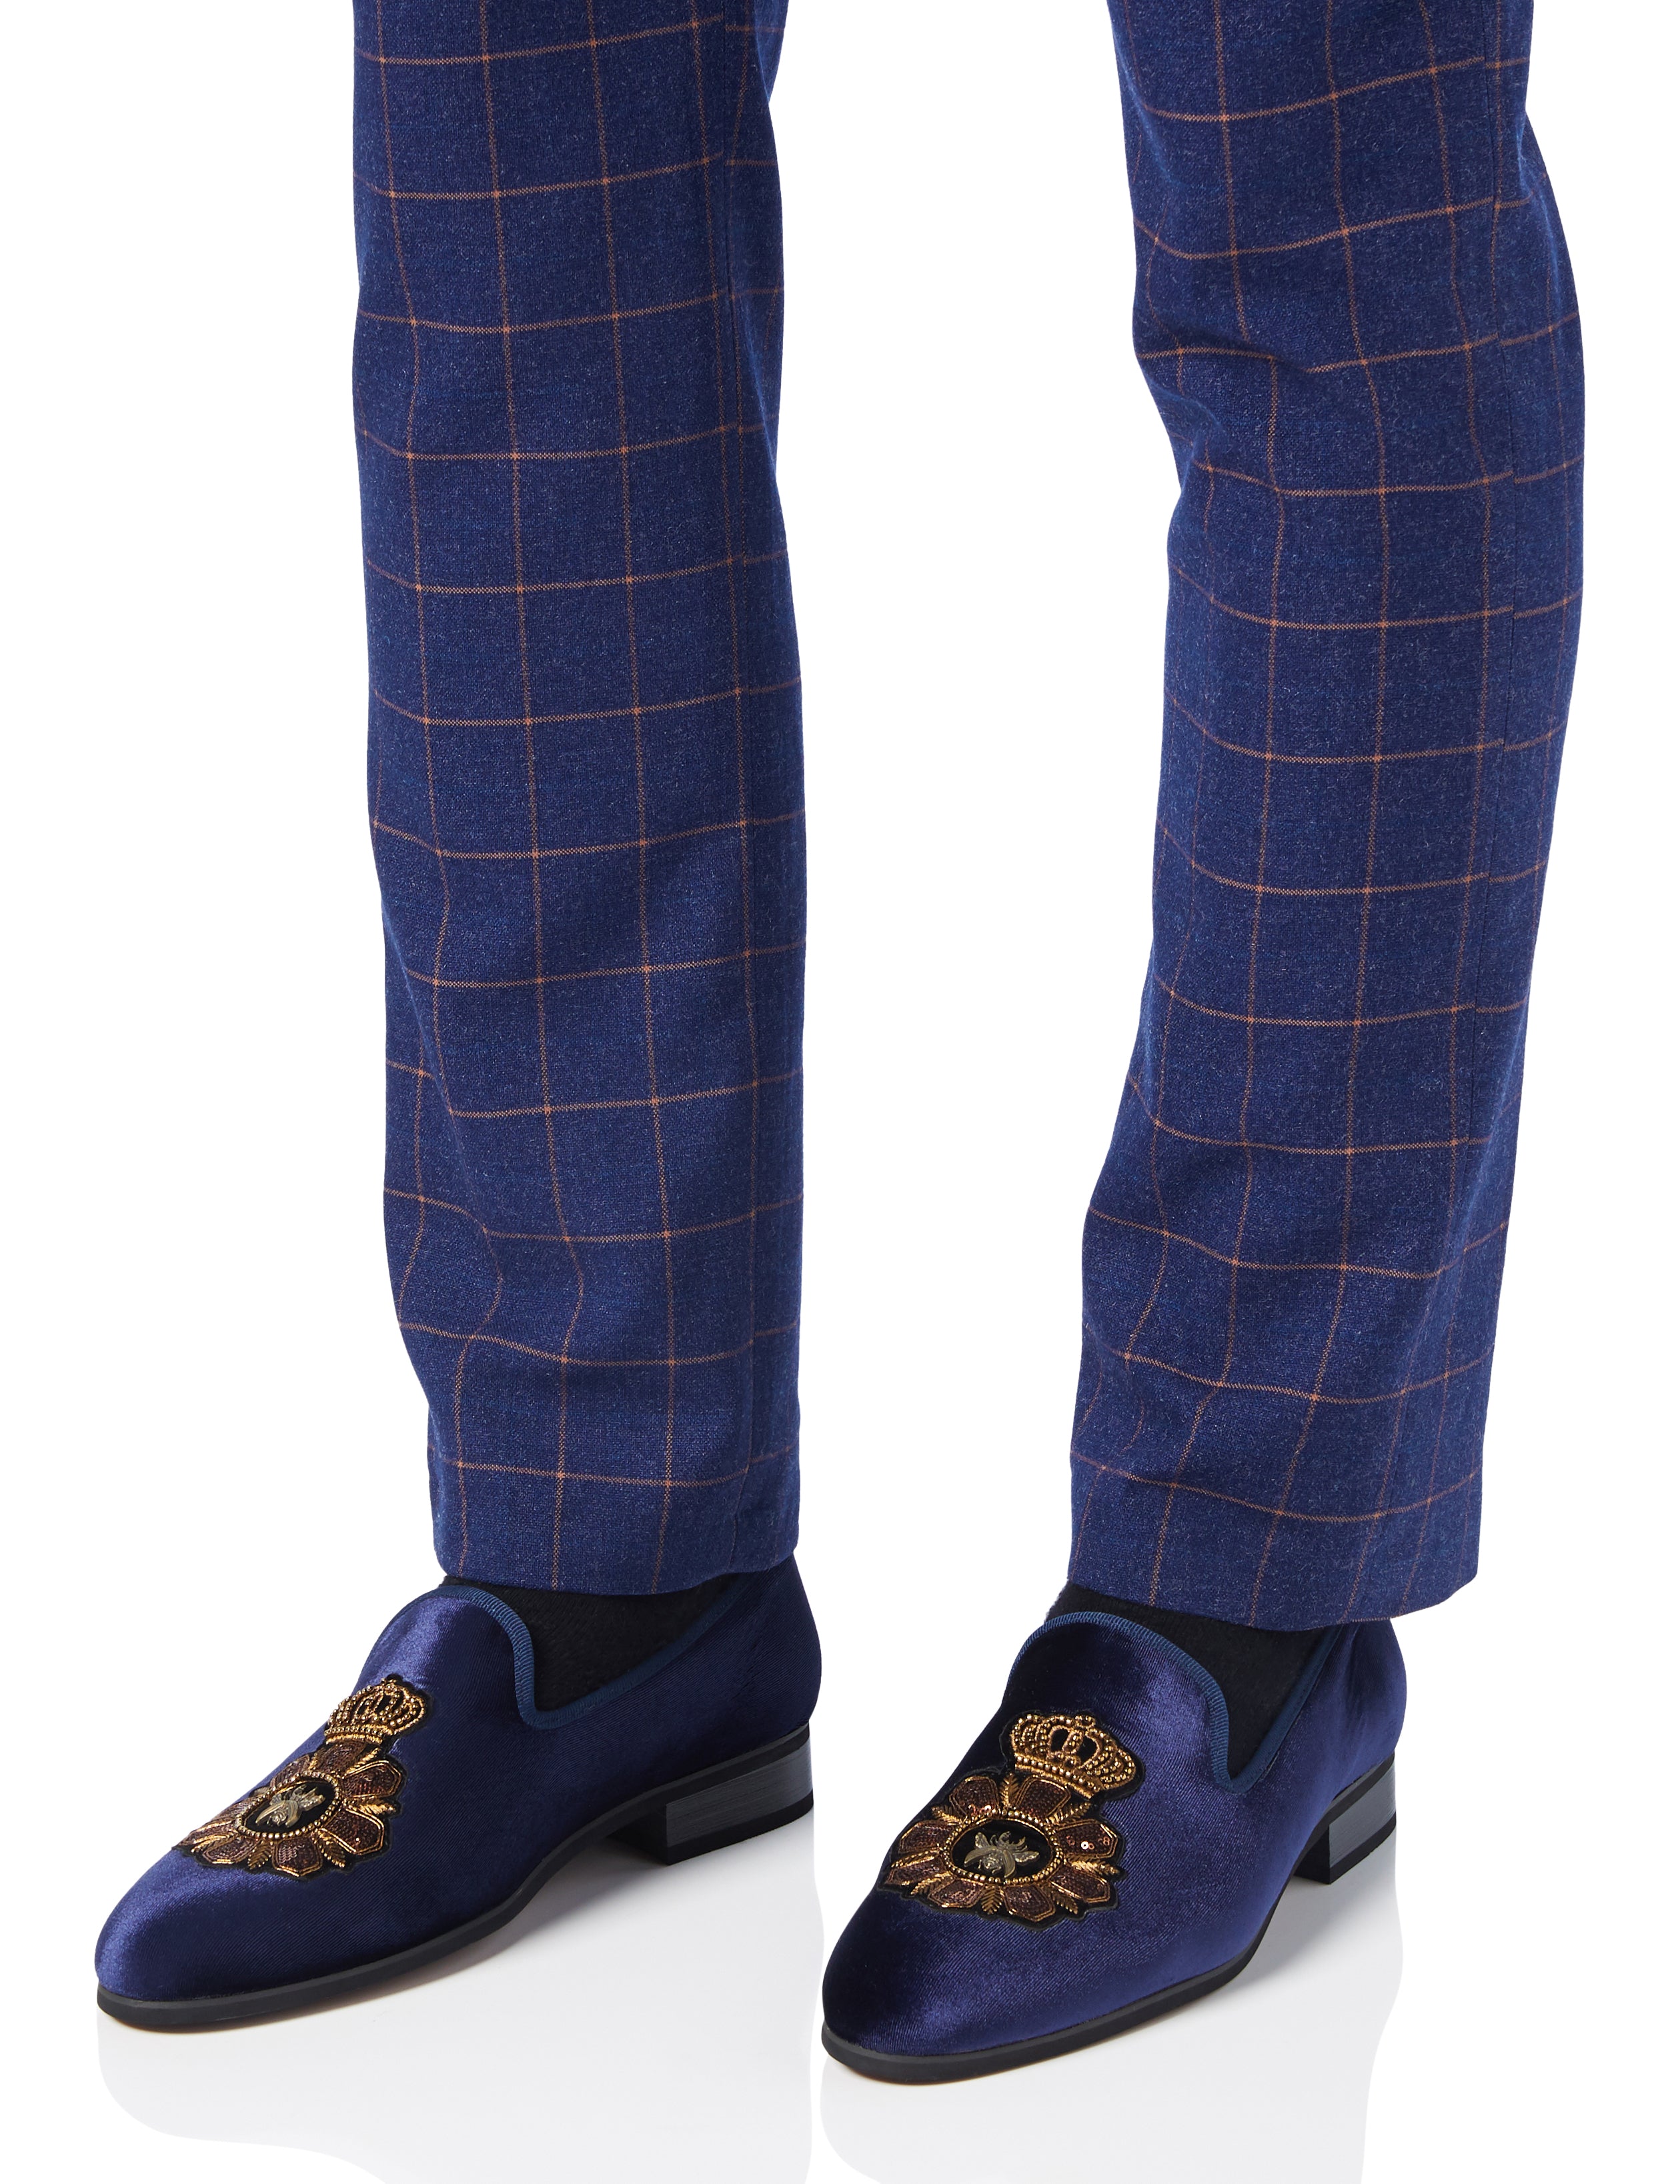 Mens Velvet Loafers Bee Crown Embroidered Vintage Dress Shoes Slip On Slippers Navy Blue